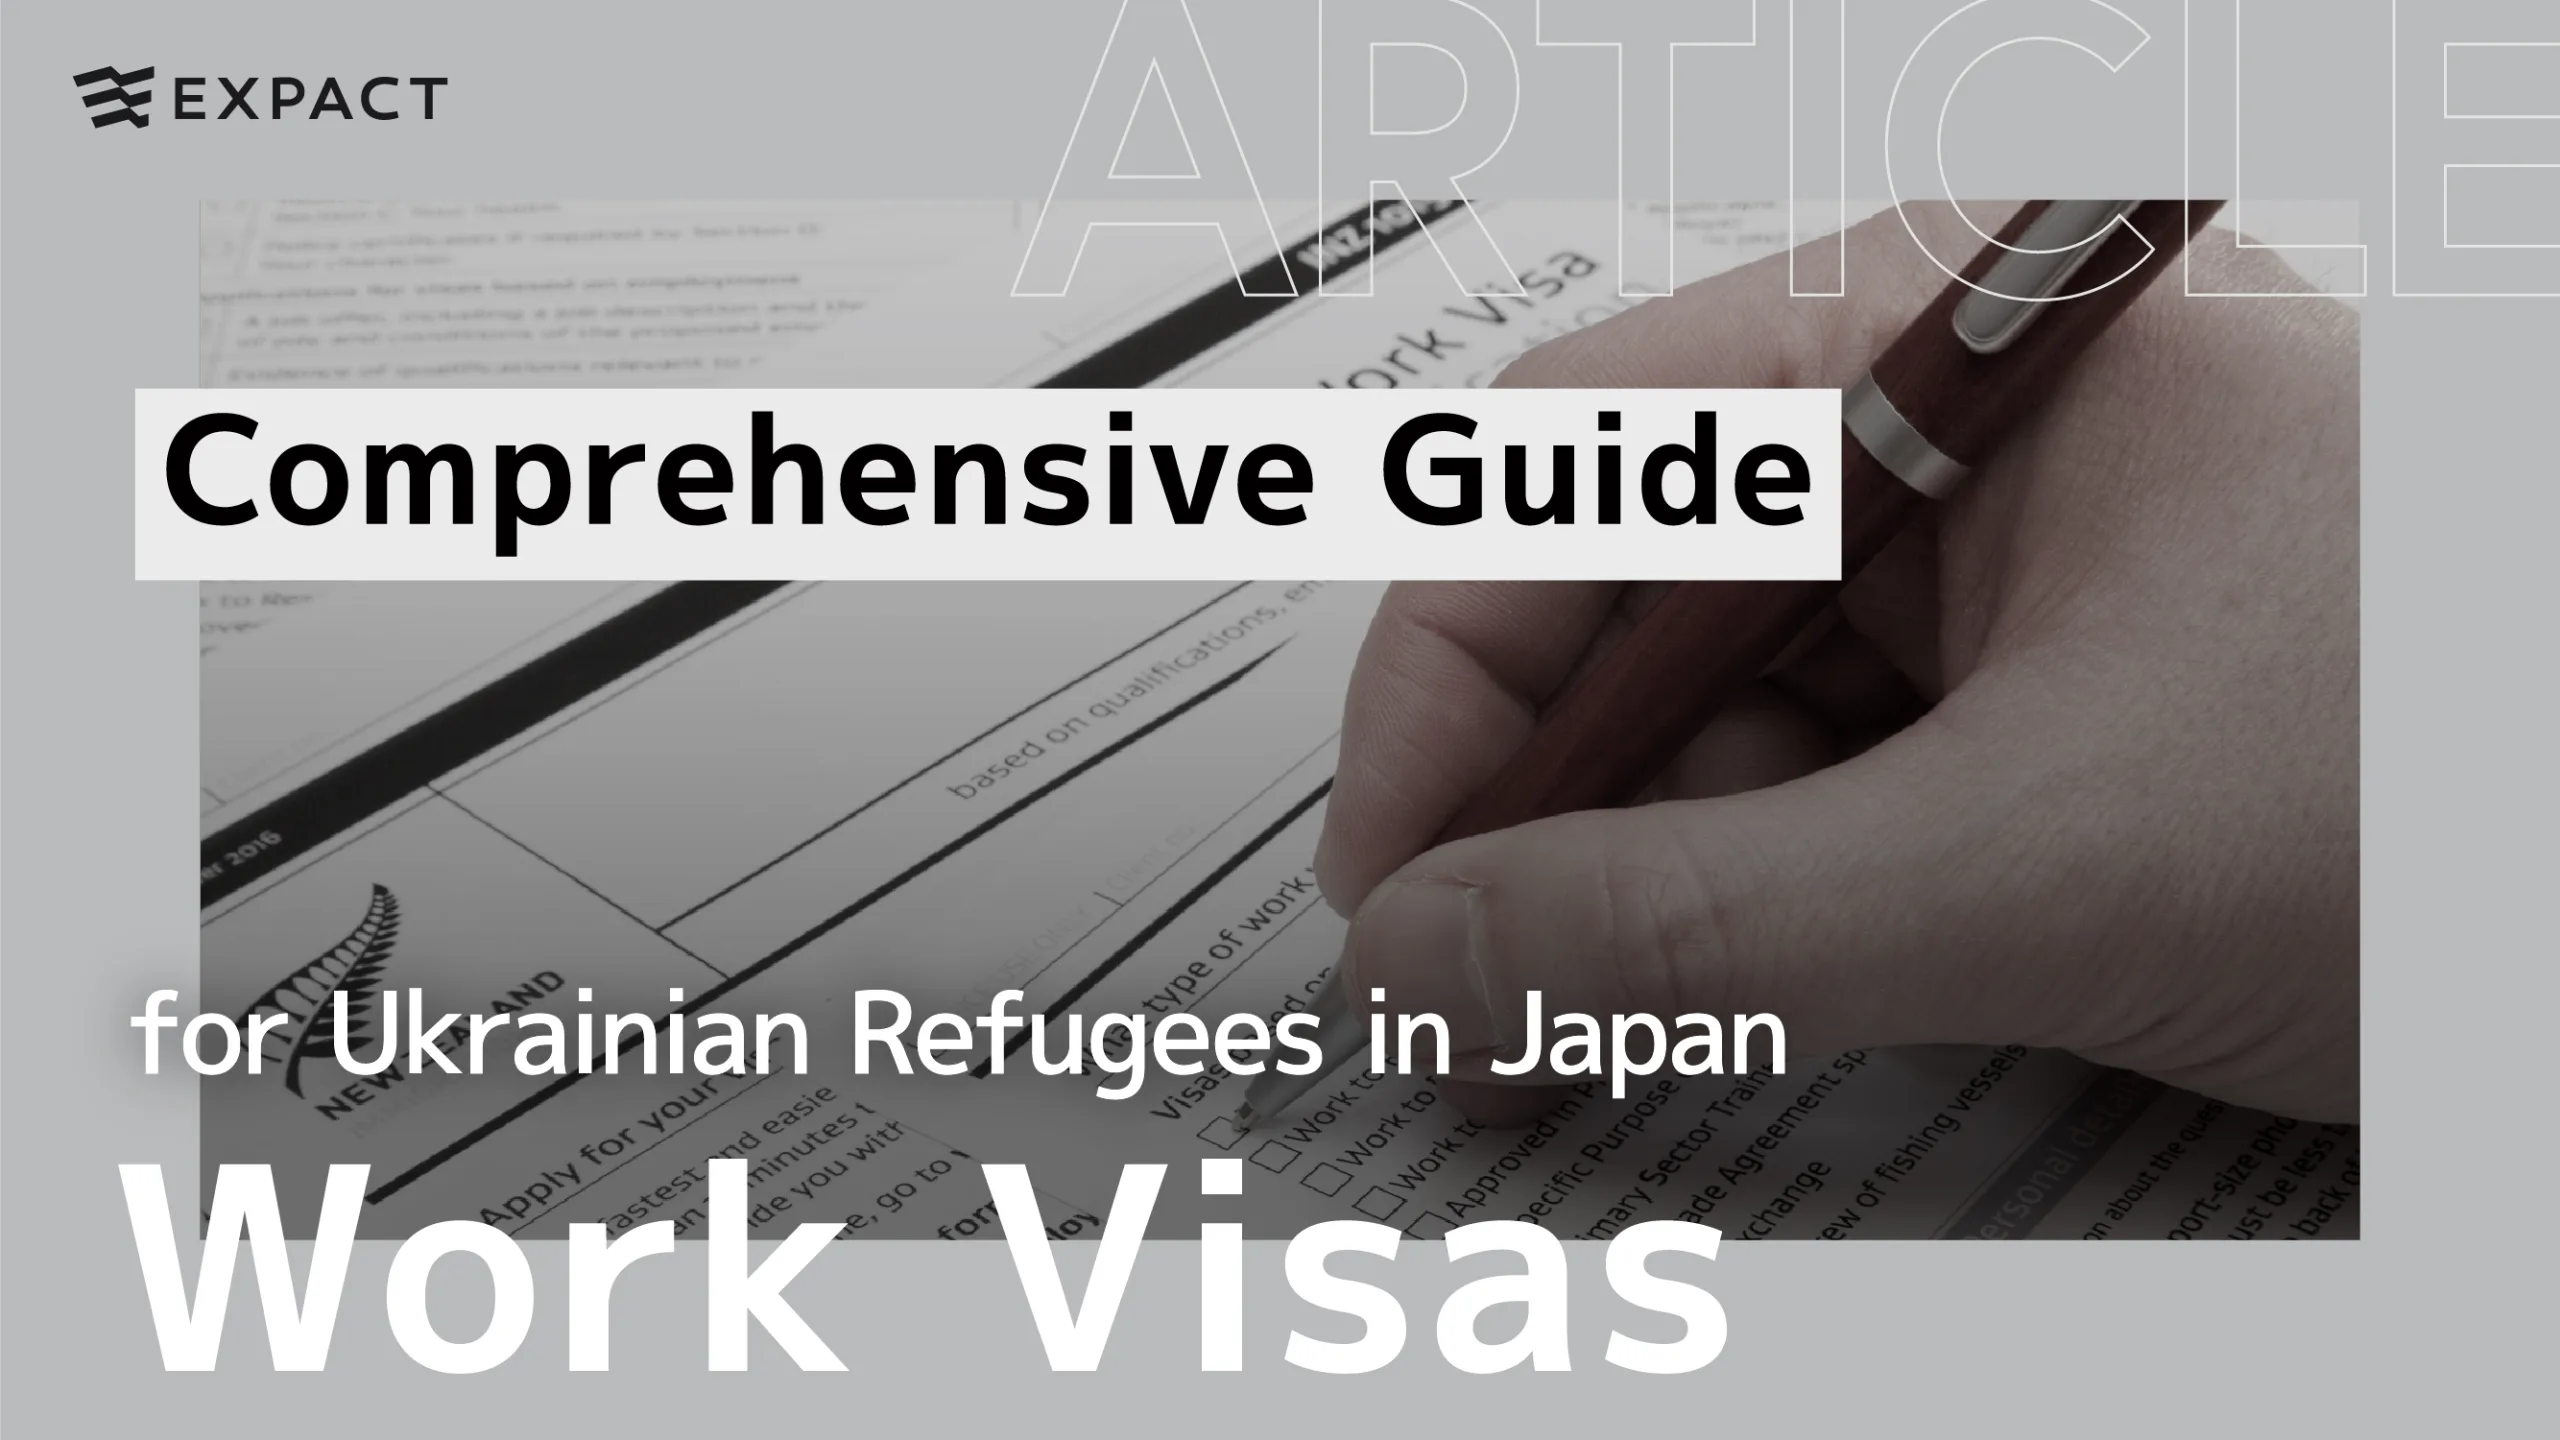 A Comprehensive Guide to Work Visas for Ukrainian Refugees in Japan